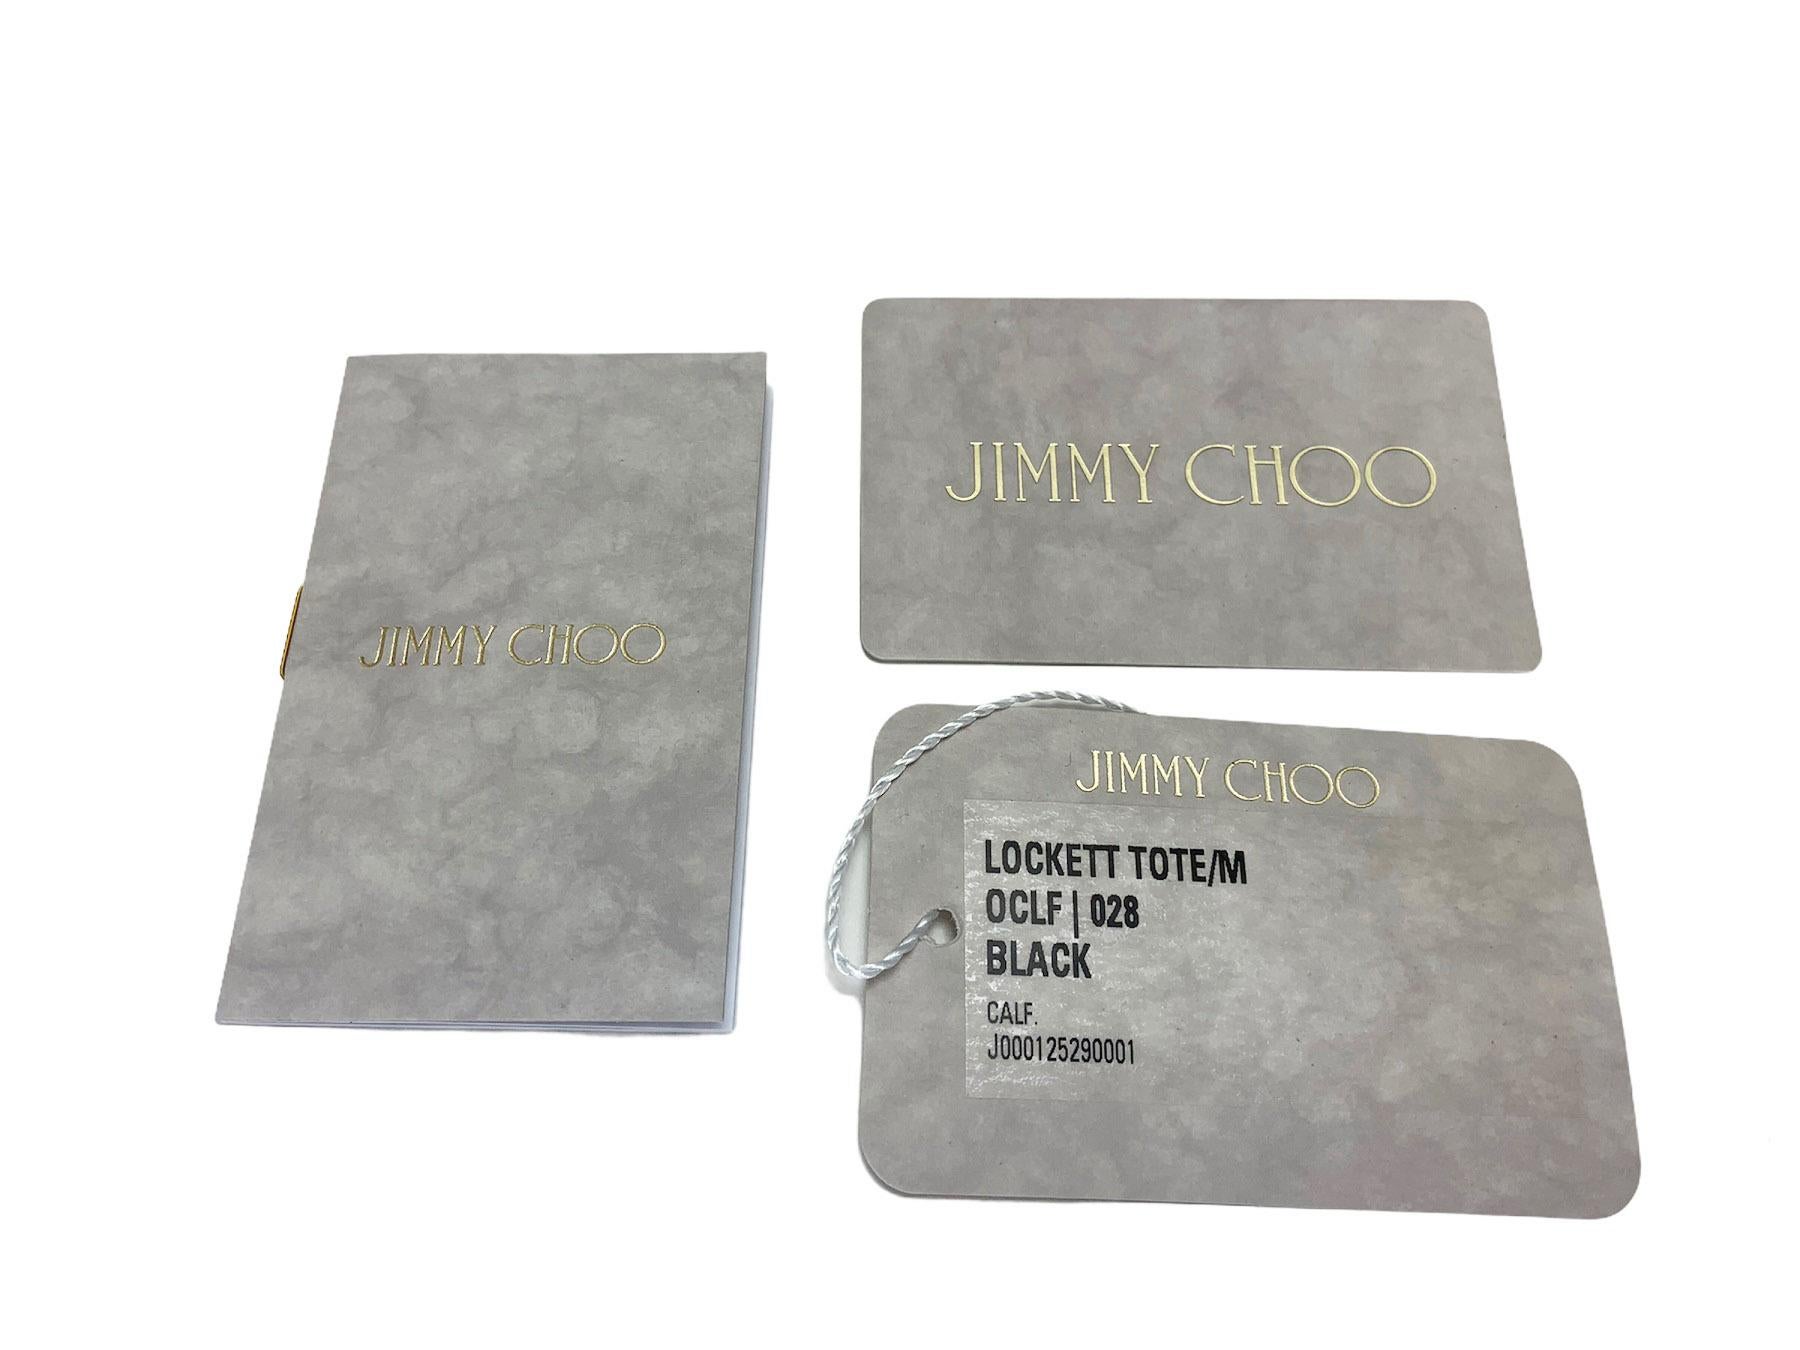 New Jimmy Choo *Lockett* Black Leather Gold Studded Medium size Top Handle Bag For Sale 2